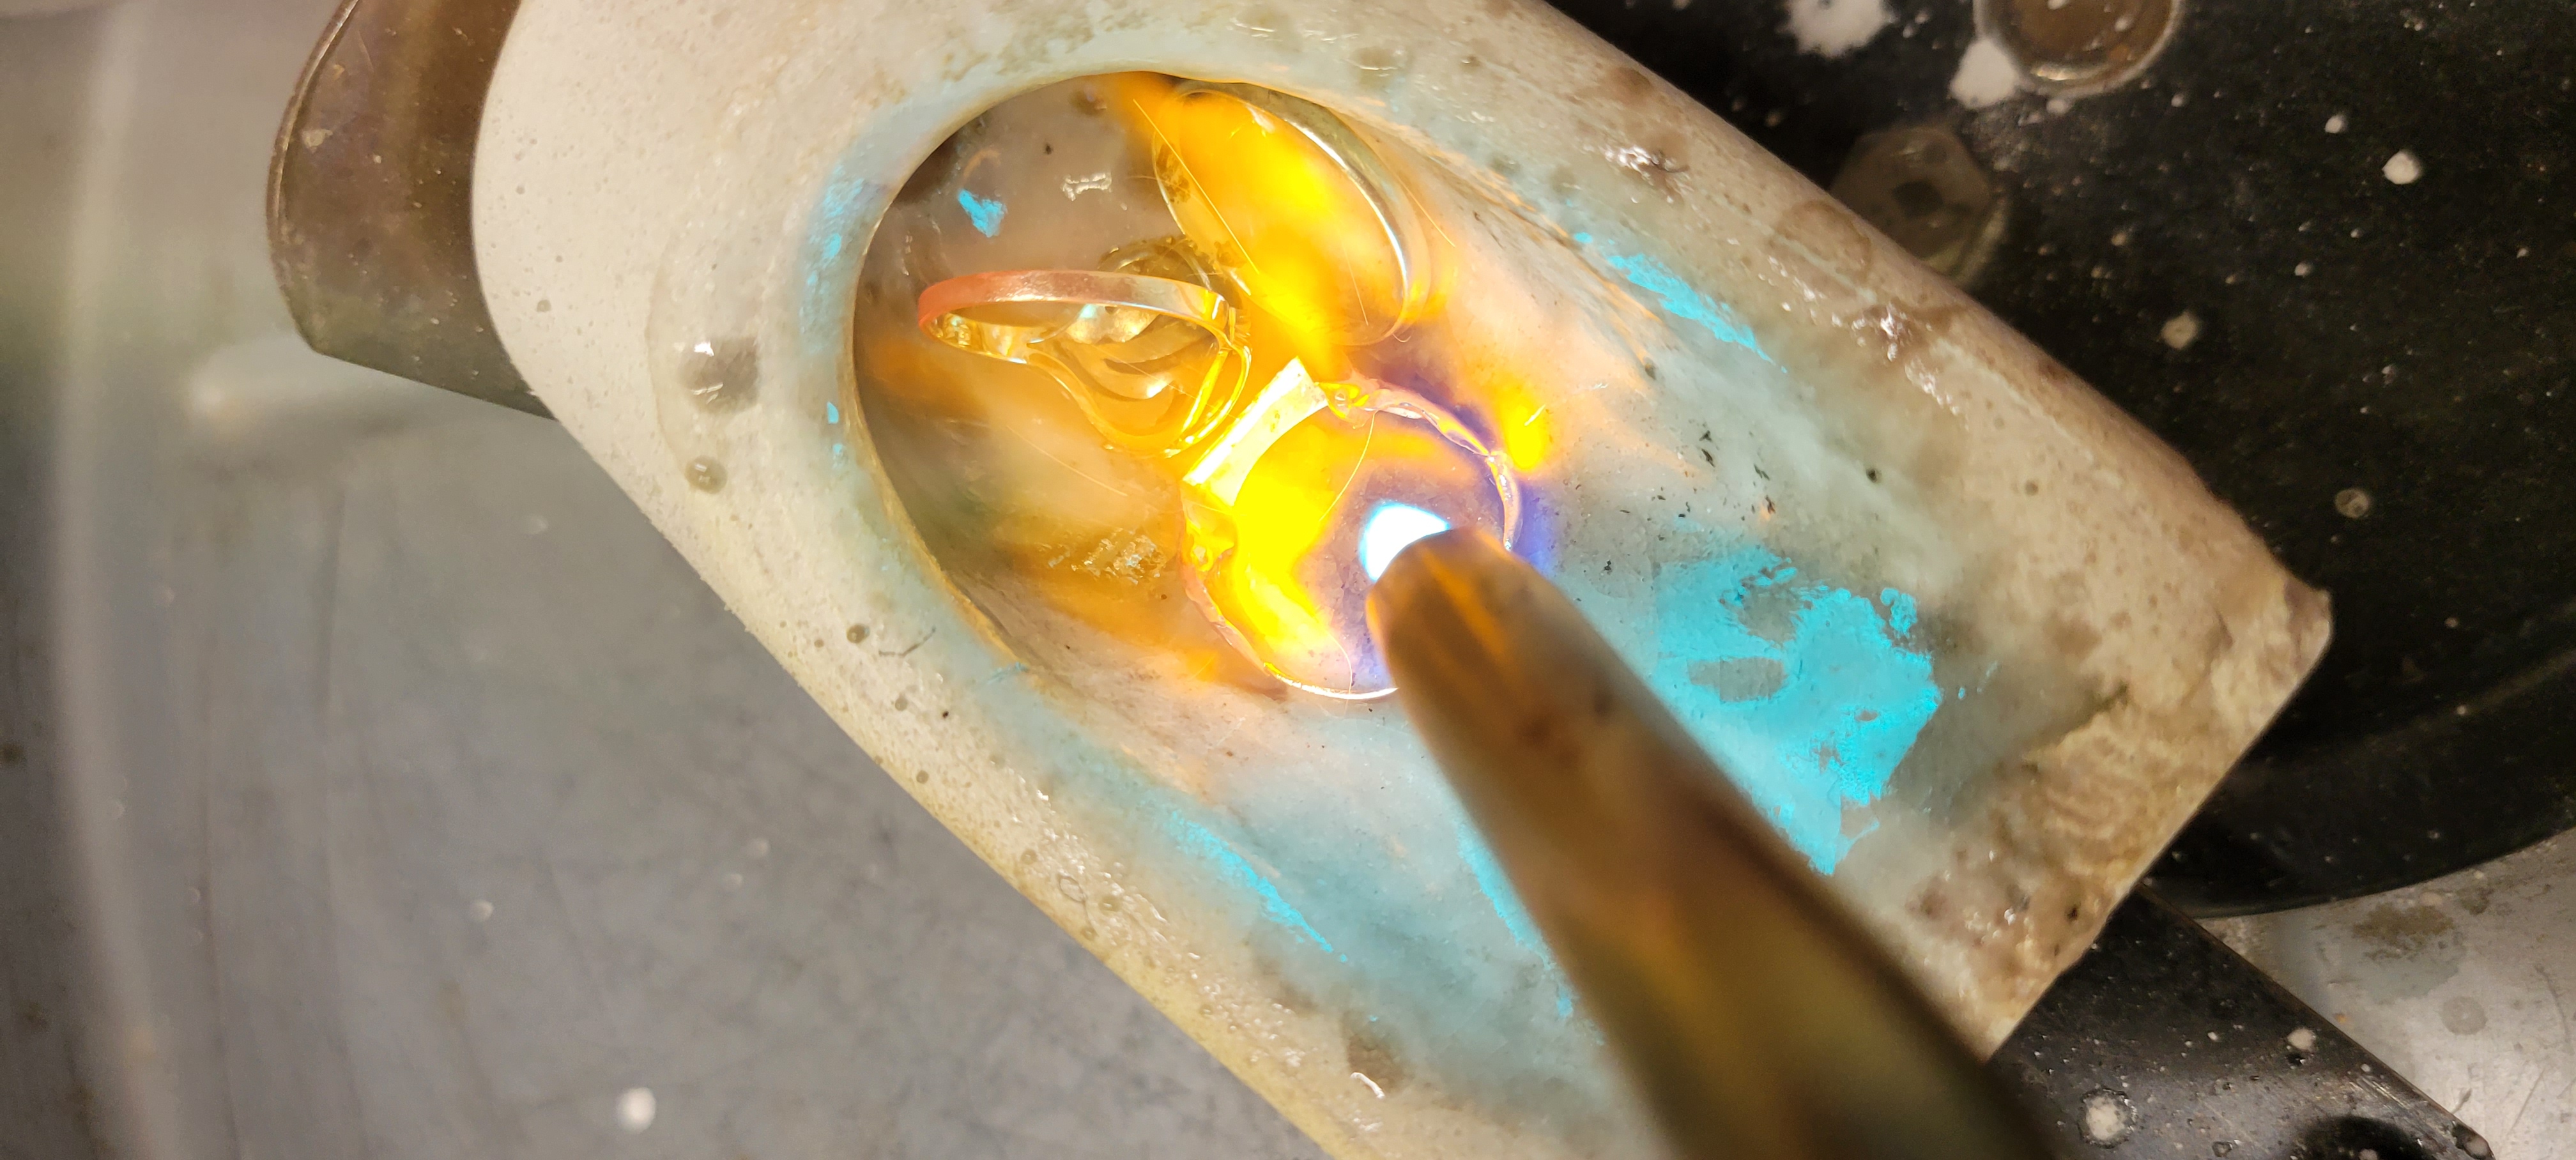 torch melting gold crucible